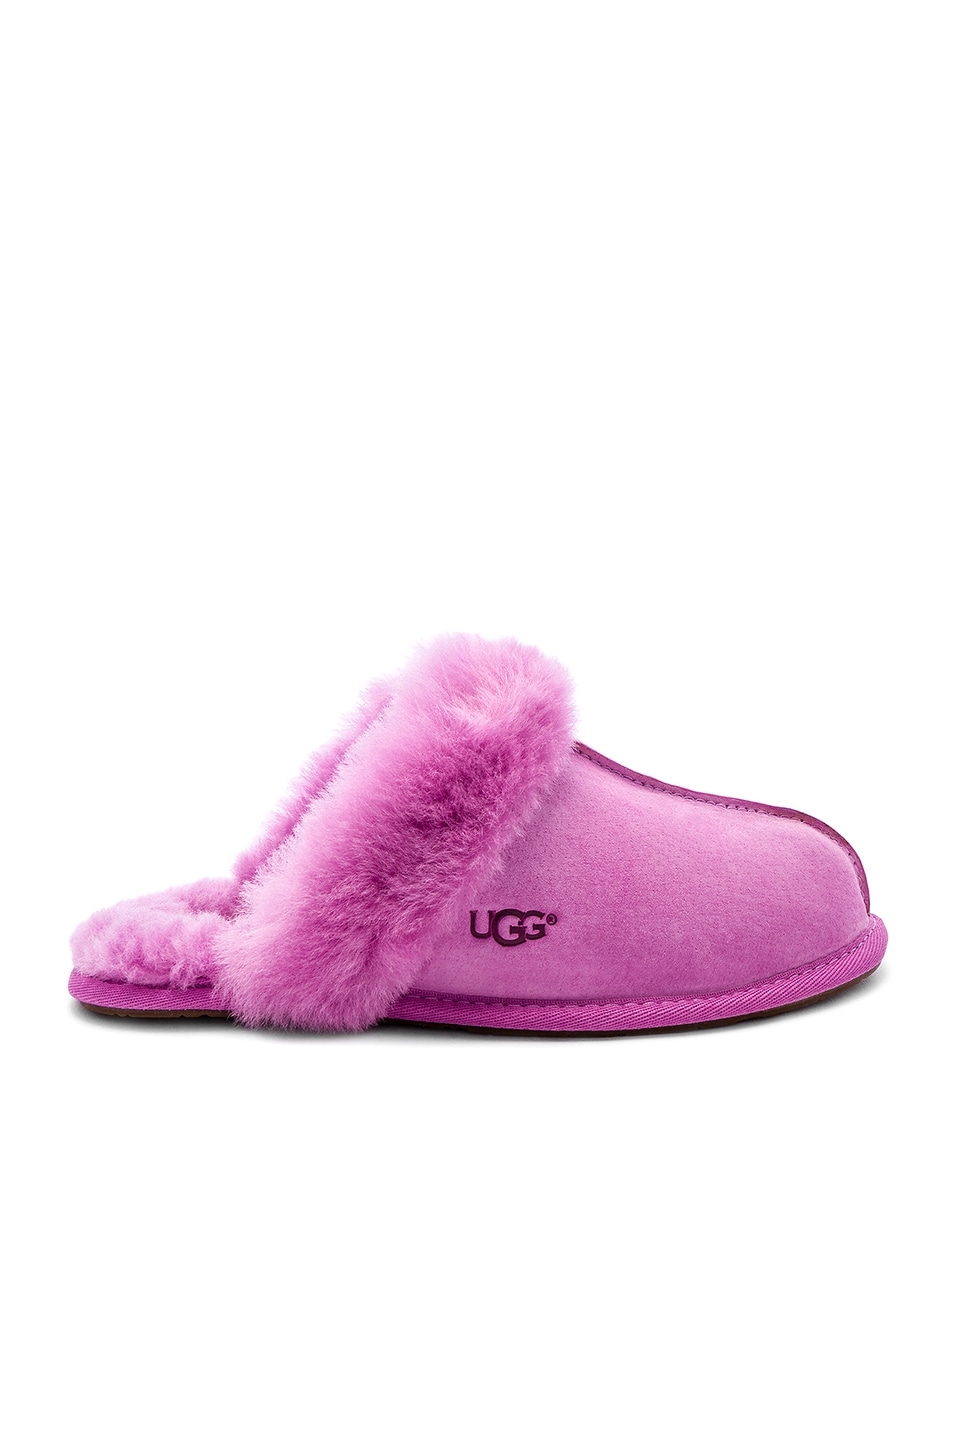 ugg slippers bodacious